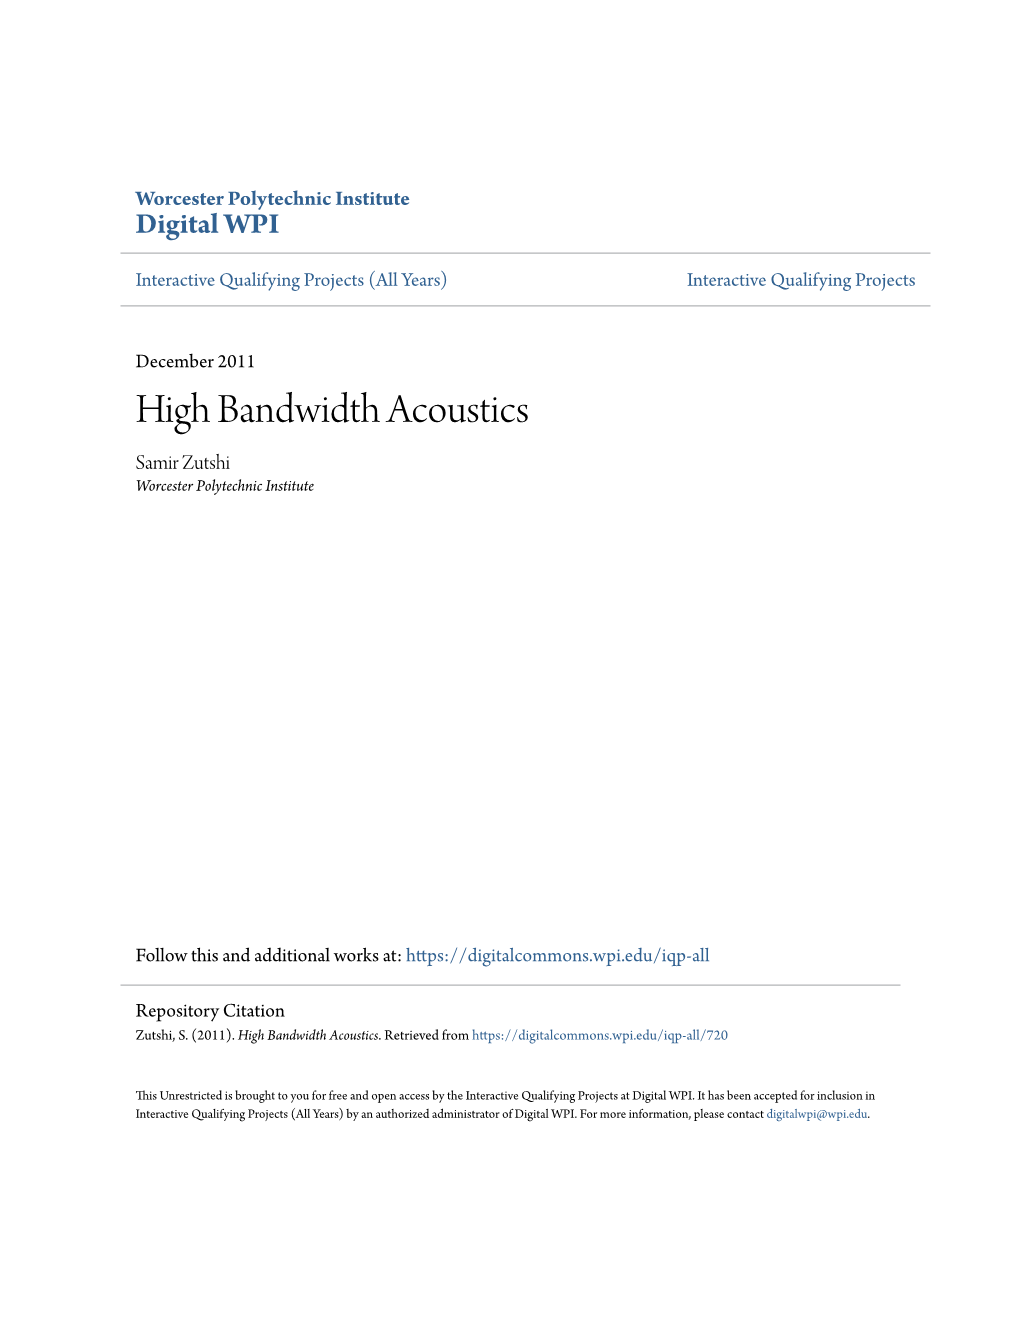 High Bandwidth Acoustics Samir Zutshi Worcester Polytechnic Institute